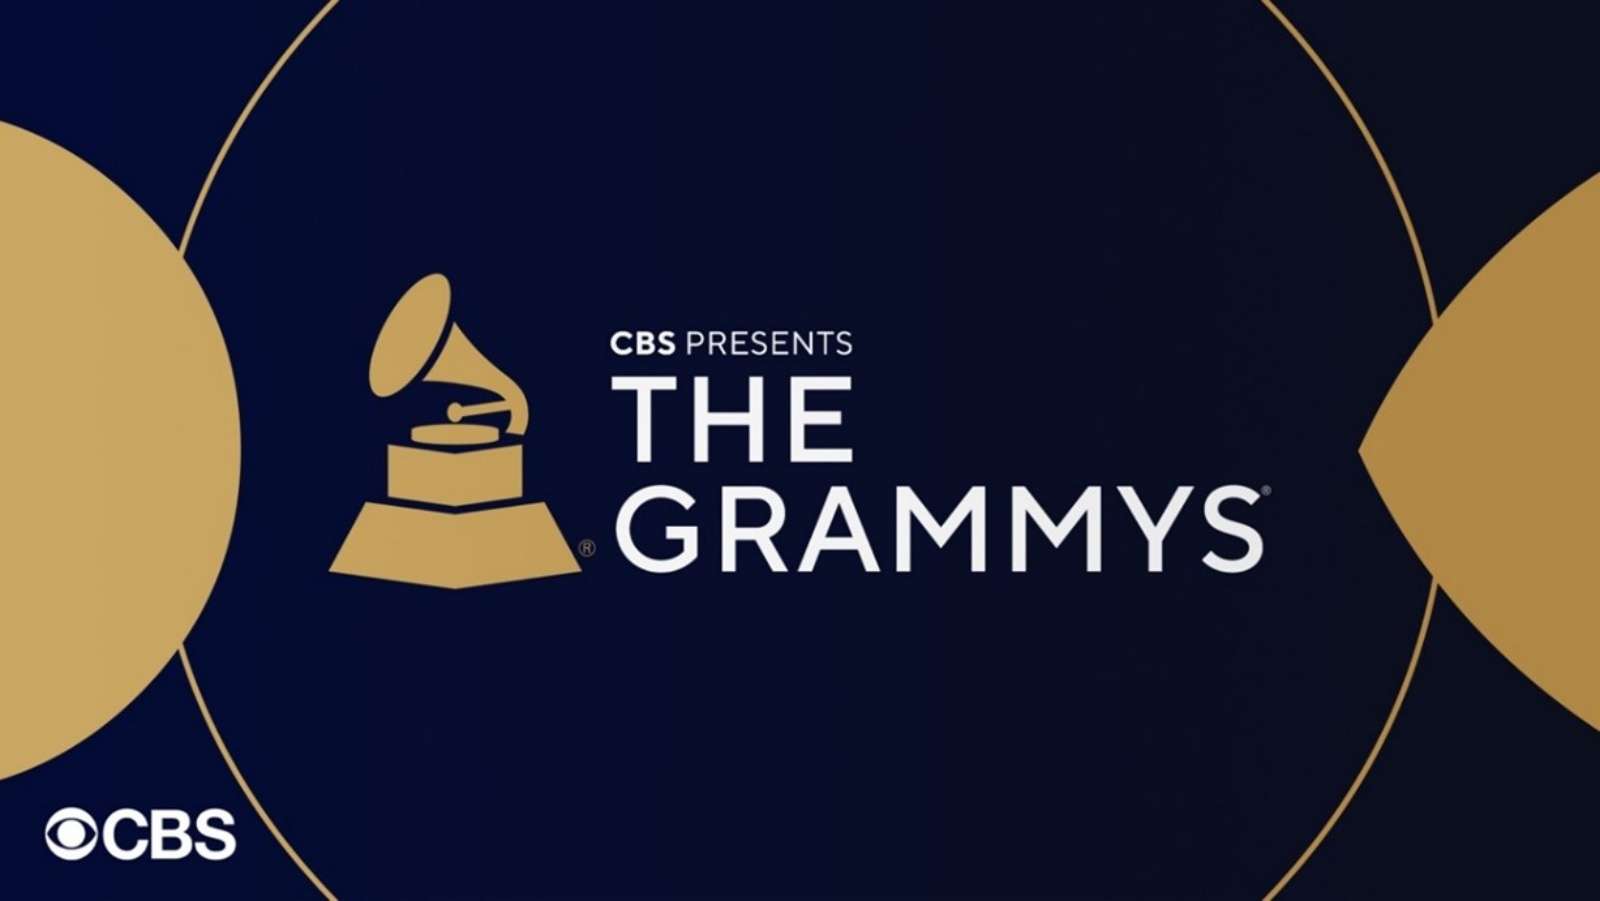 The Grammy Awards logo featured a golden gramophone award.